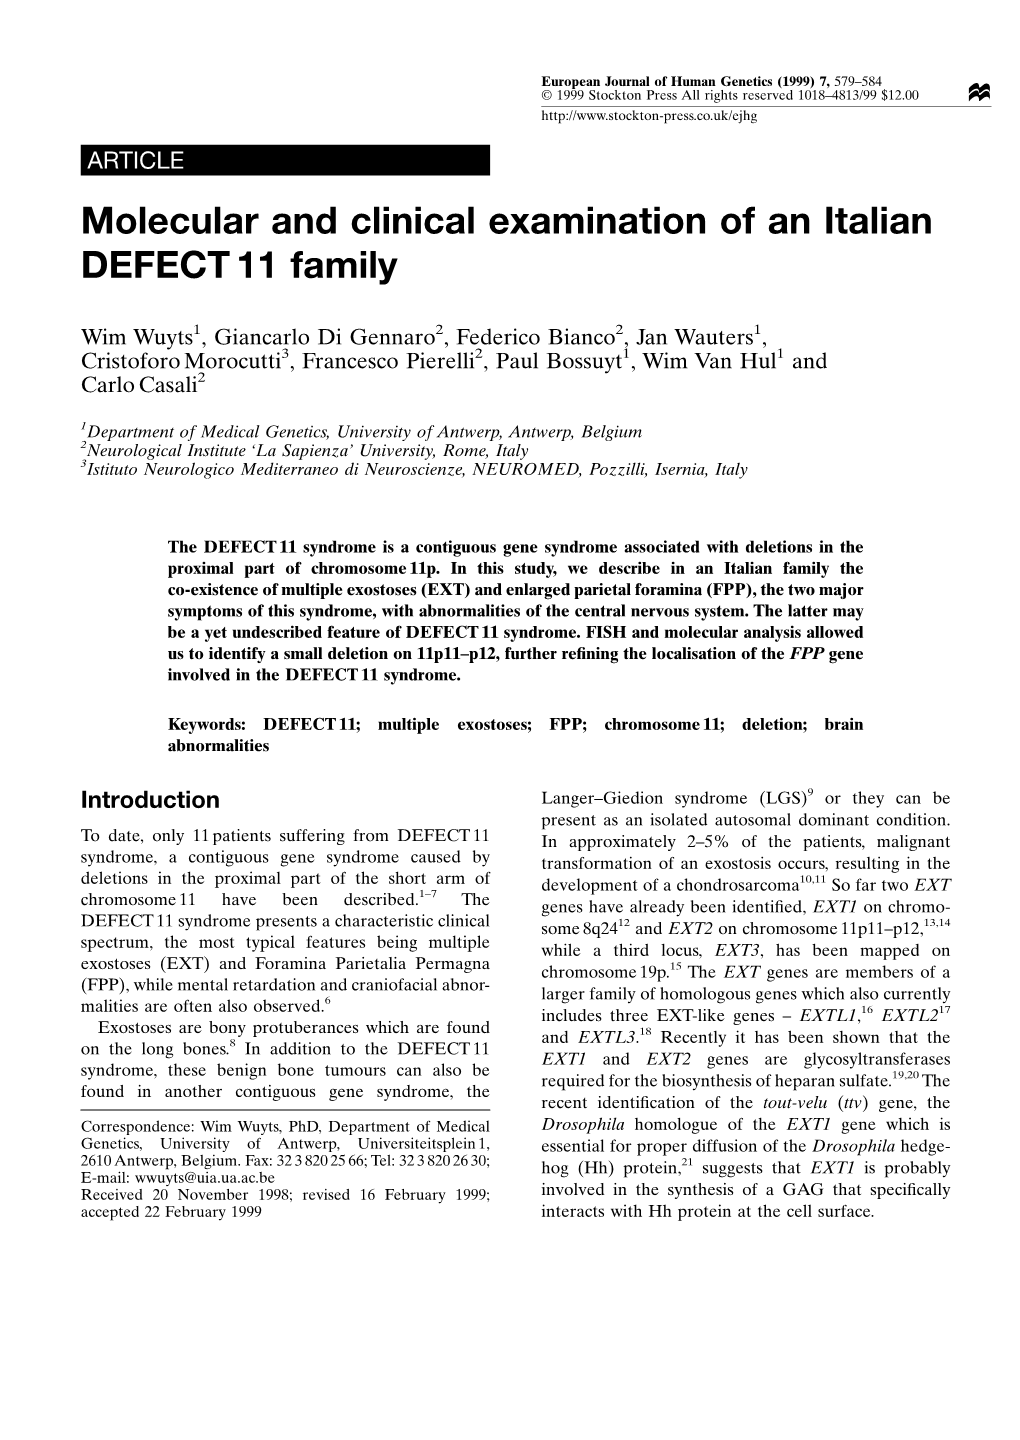 Molecular and Clinical Examination of an Italian DEFECT11 Family